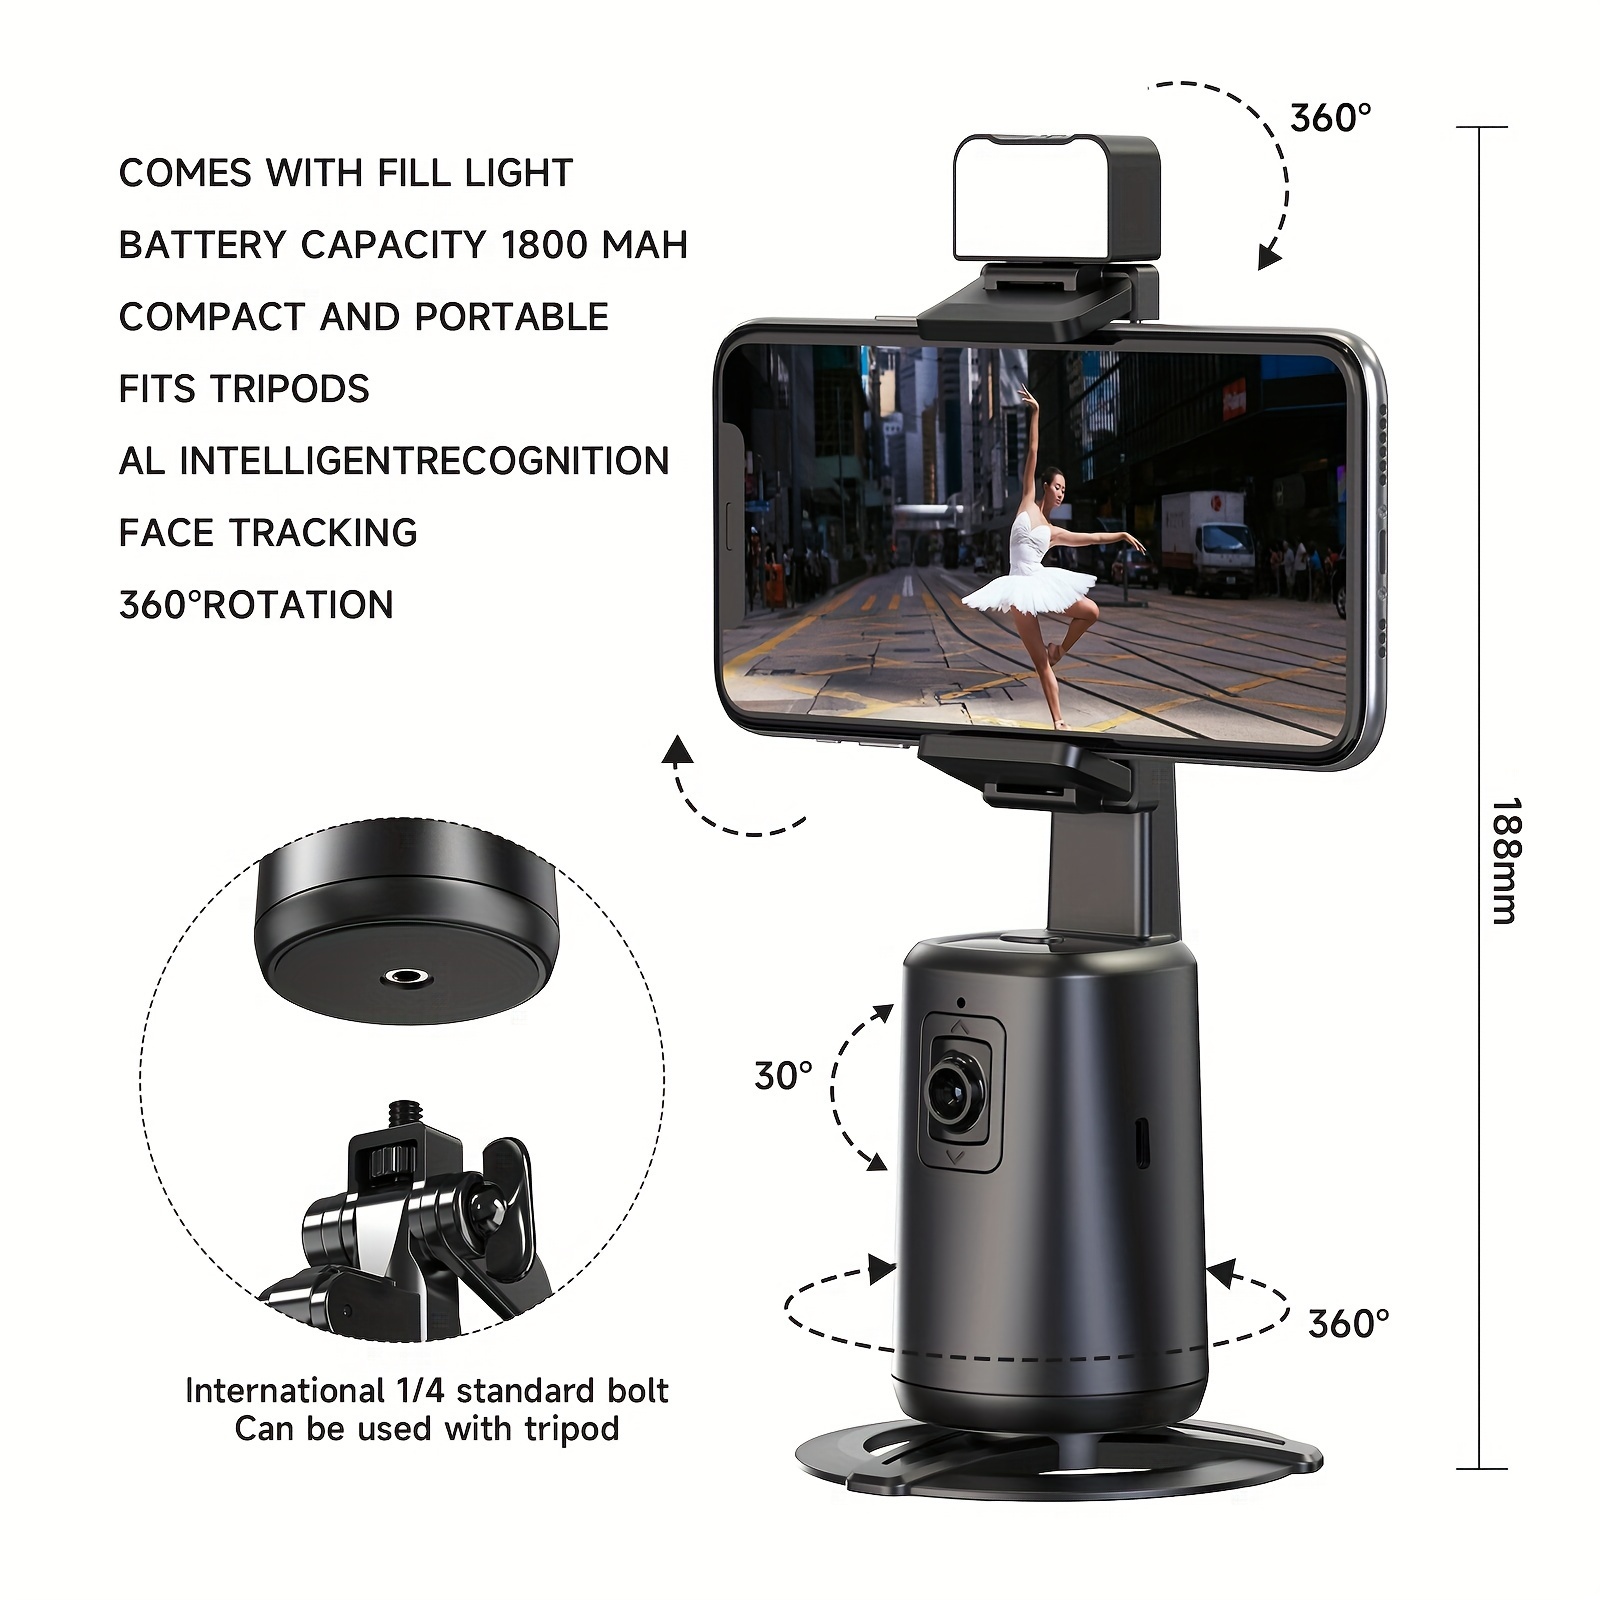 Support de téléphone Intelligent Selfie Stick,Camera Suivi AI